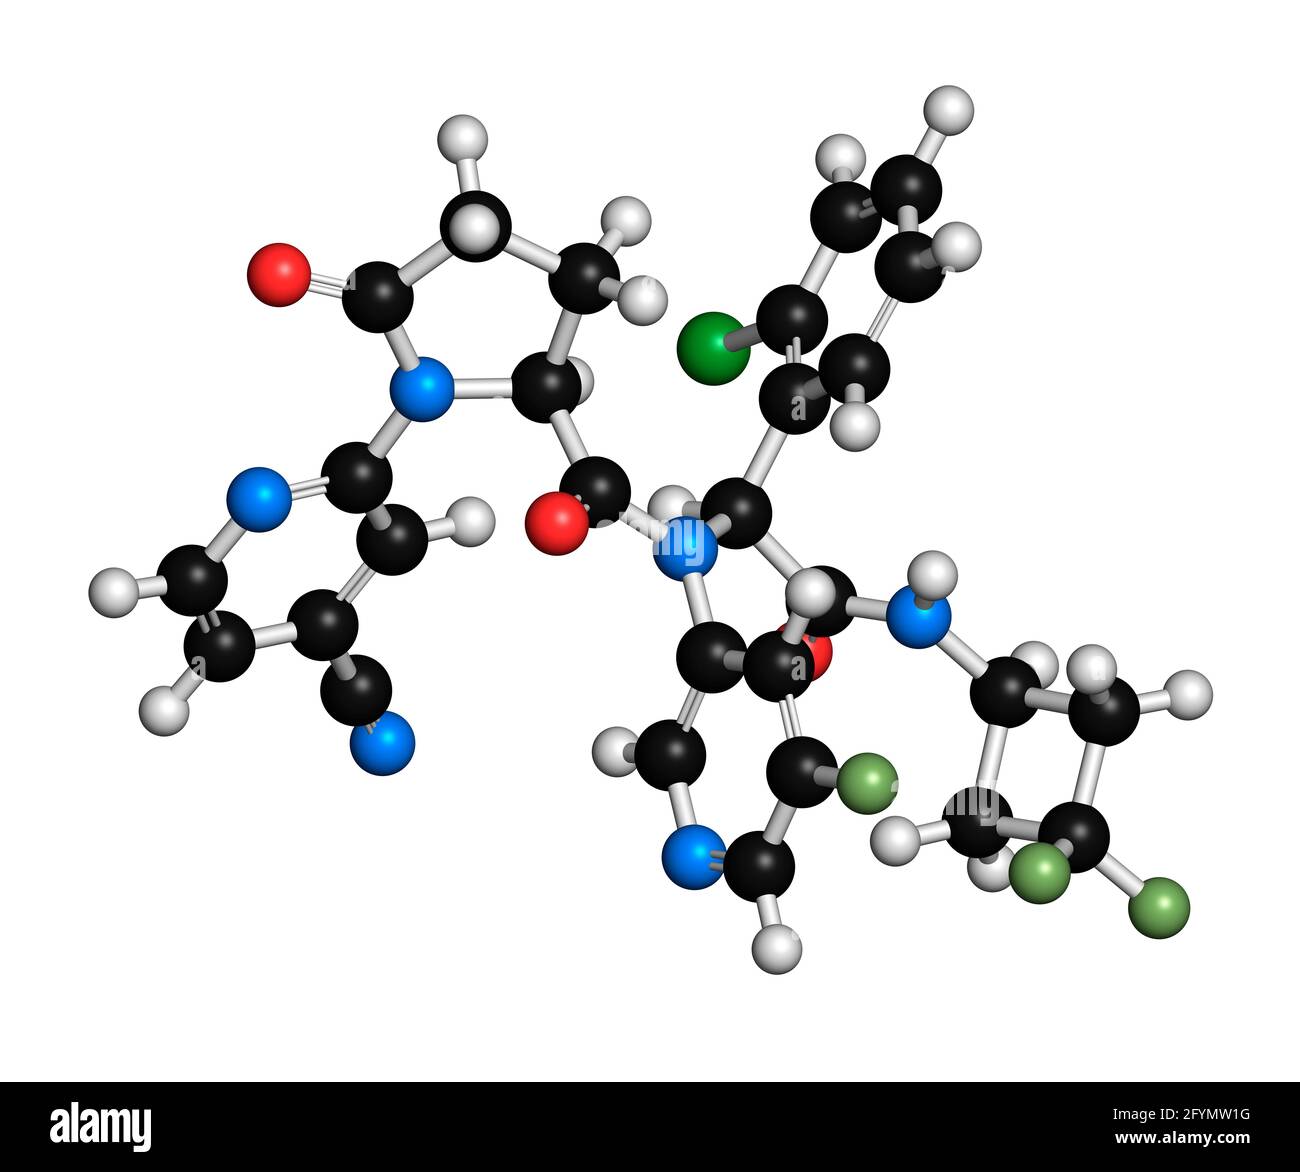 Ivosidenib cancer drug molecule, illustration Stock Photo